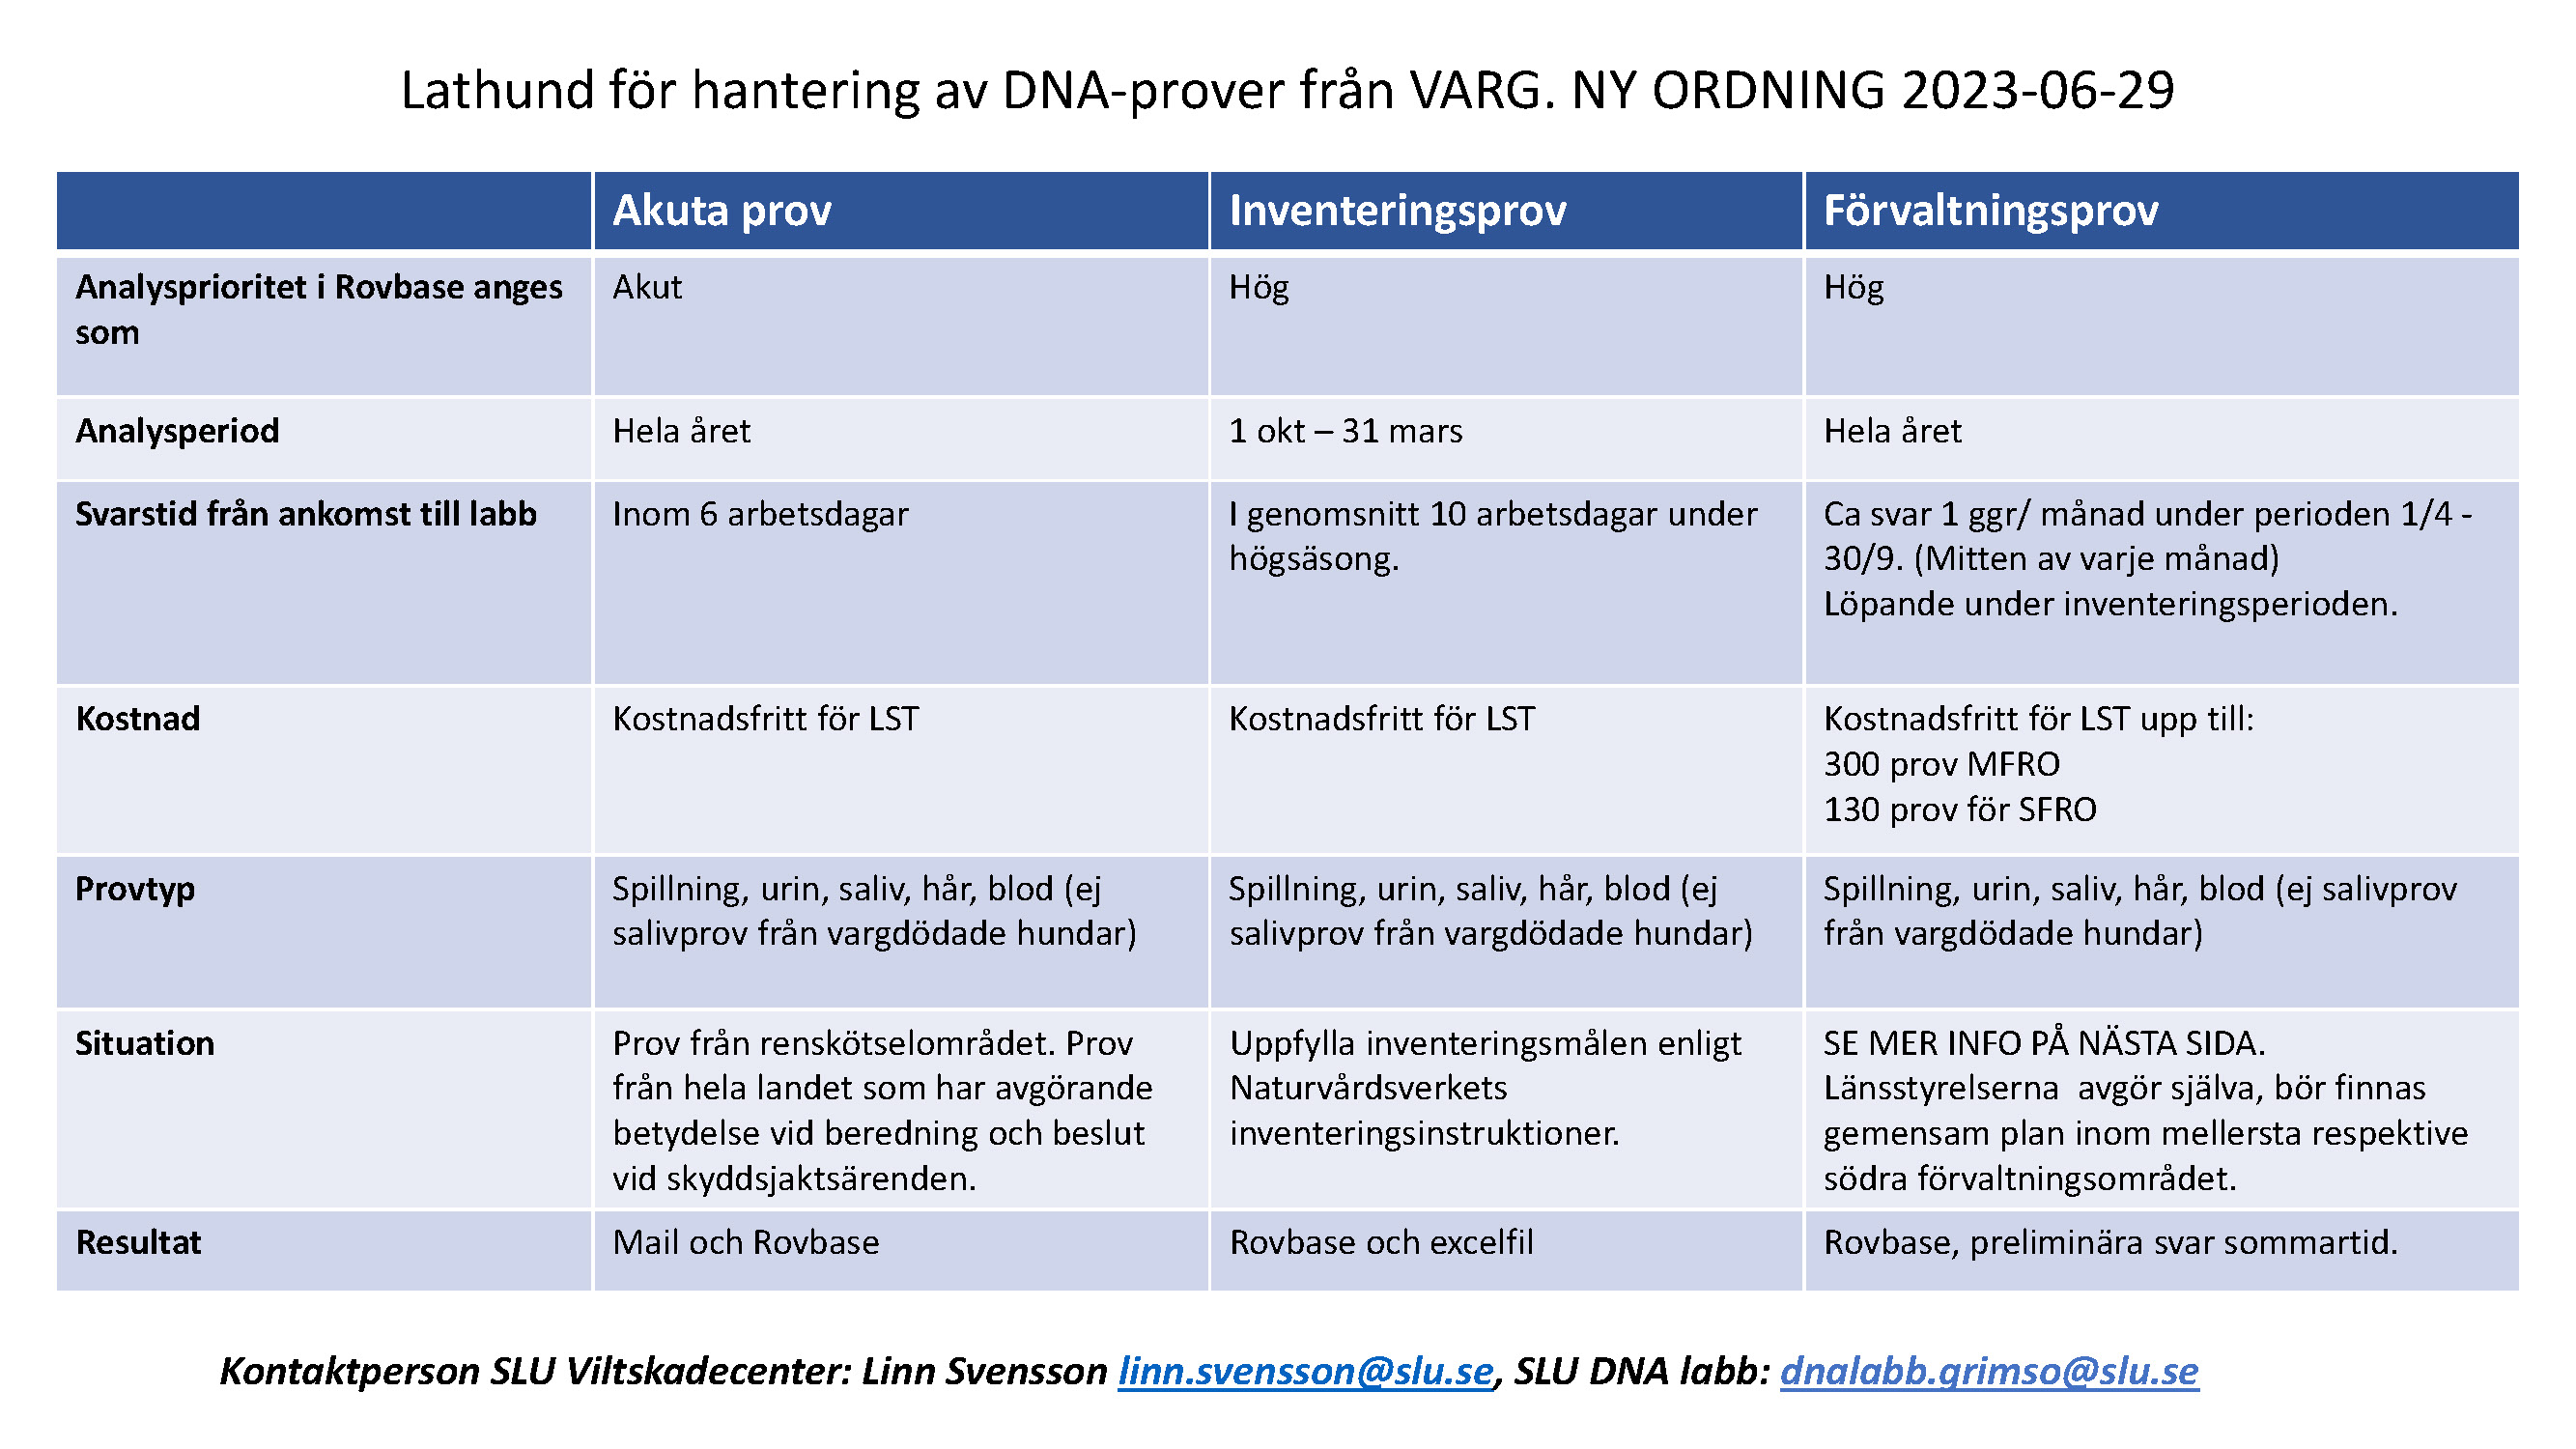 Lathund-DNA-prover-varg-inventering-forvaltning-1